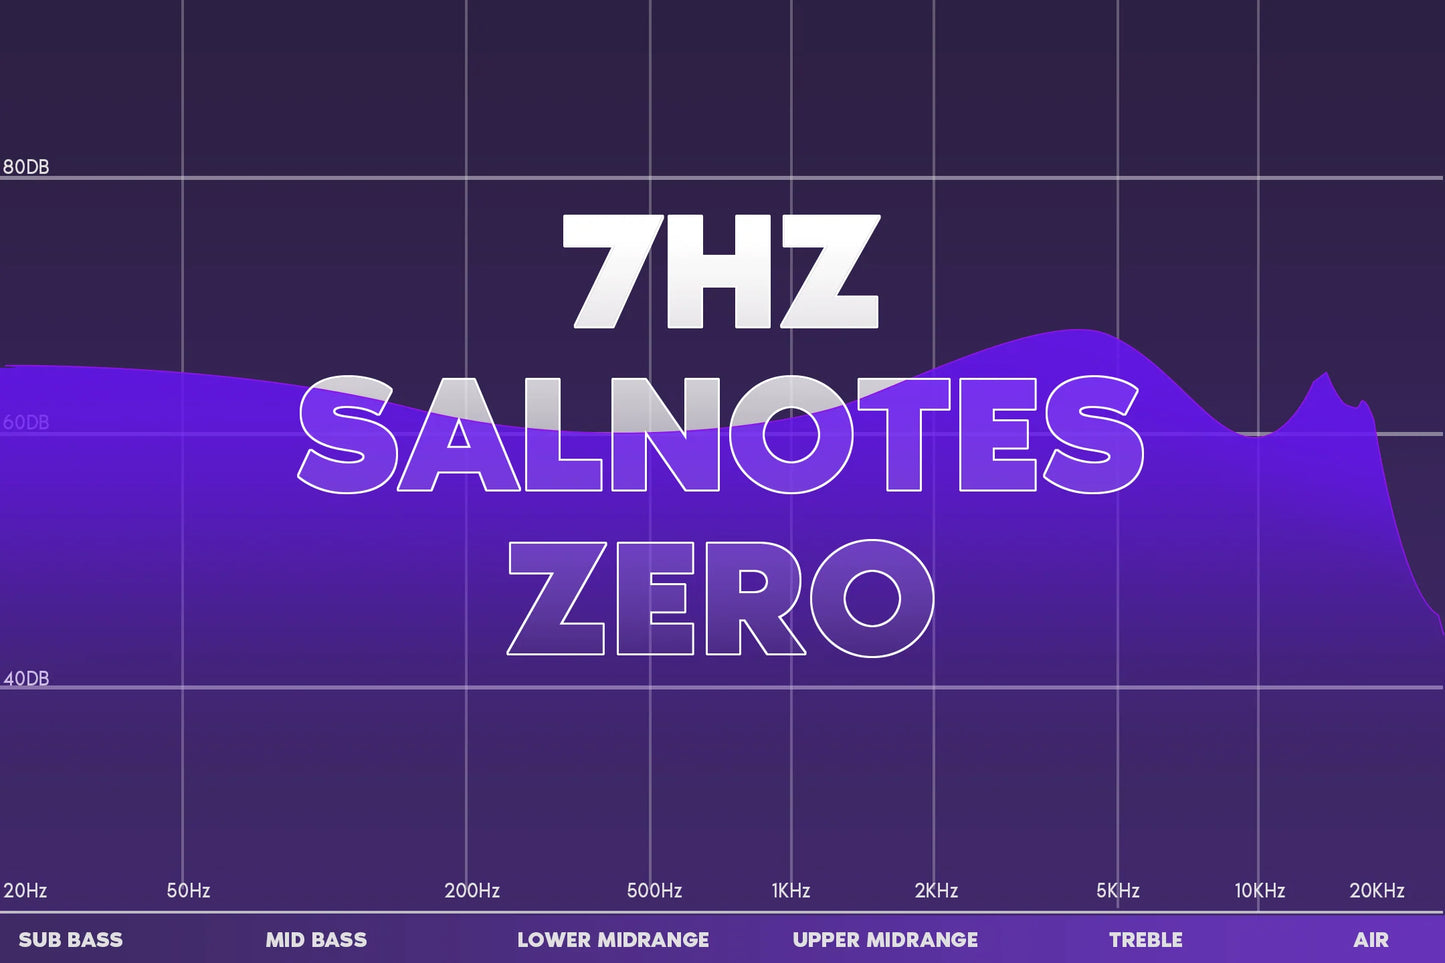 7HZ Salnotes Zero HiFi 10mm Dynamic Driver In Ear Earphone